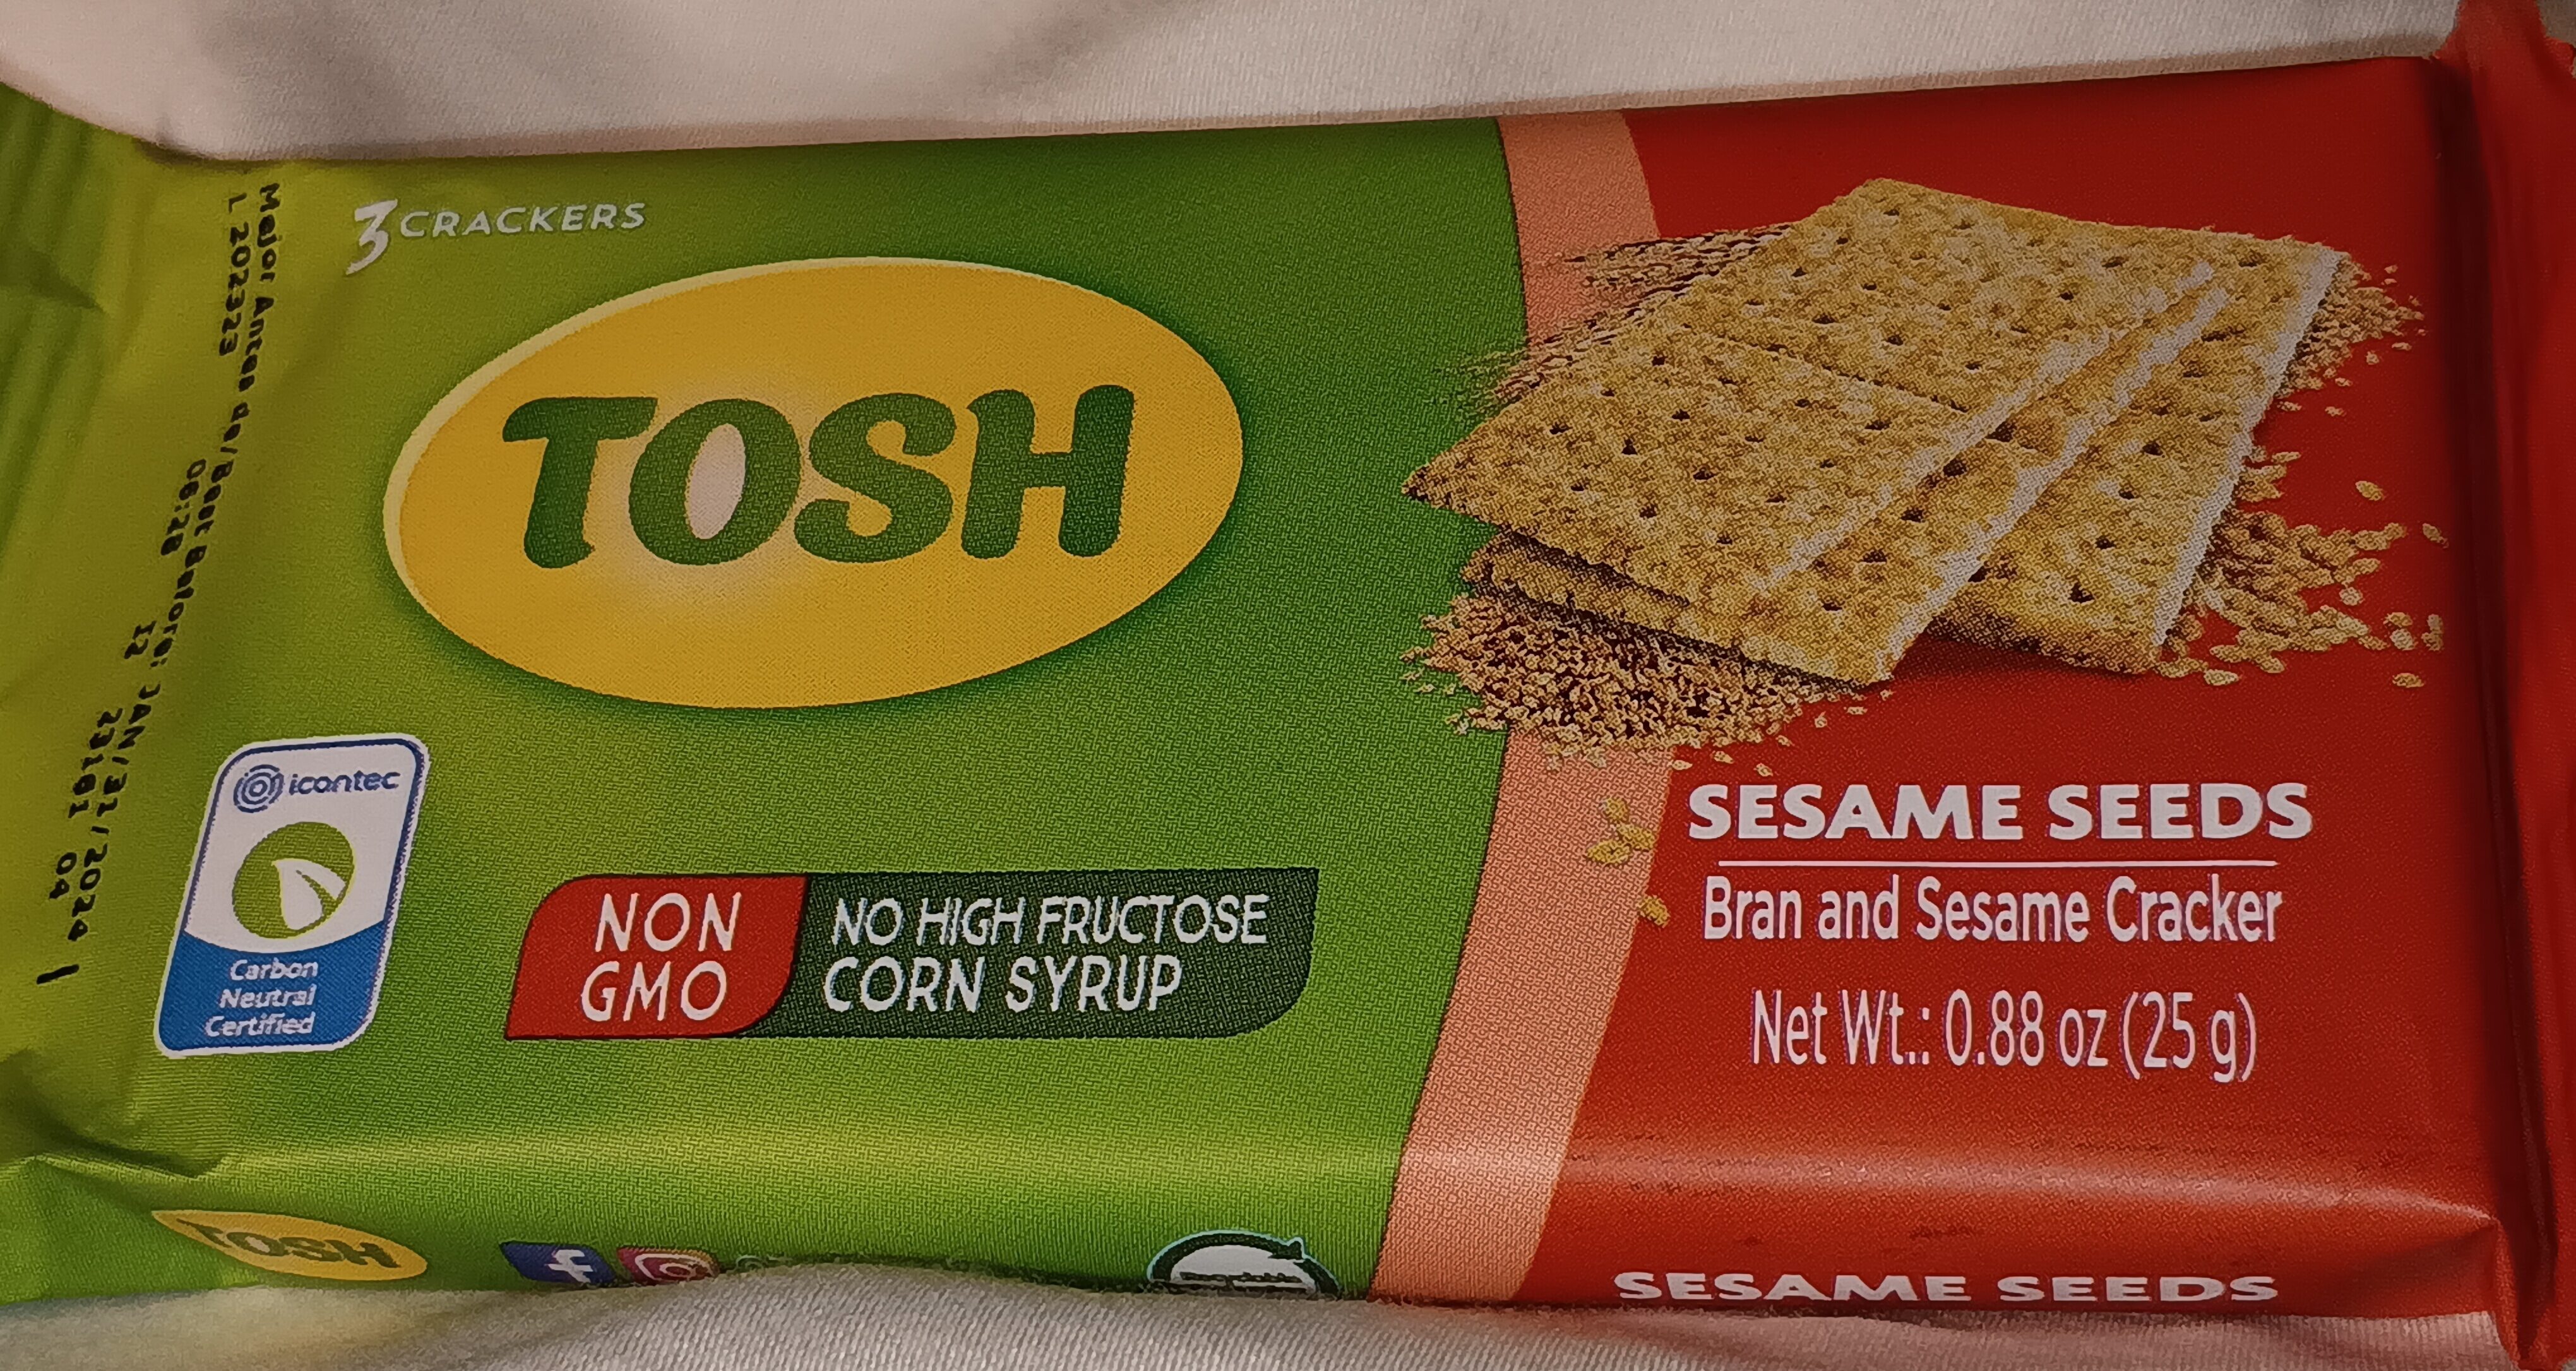 Sesame Seeds Bran and Sesame Cracker - Product